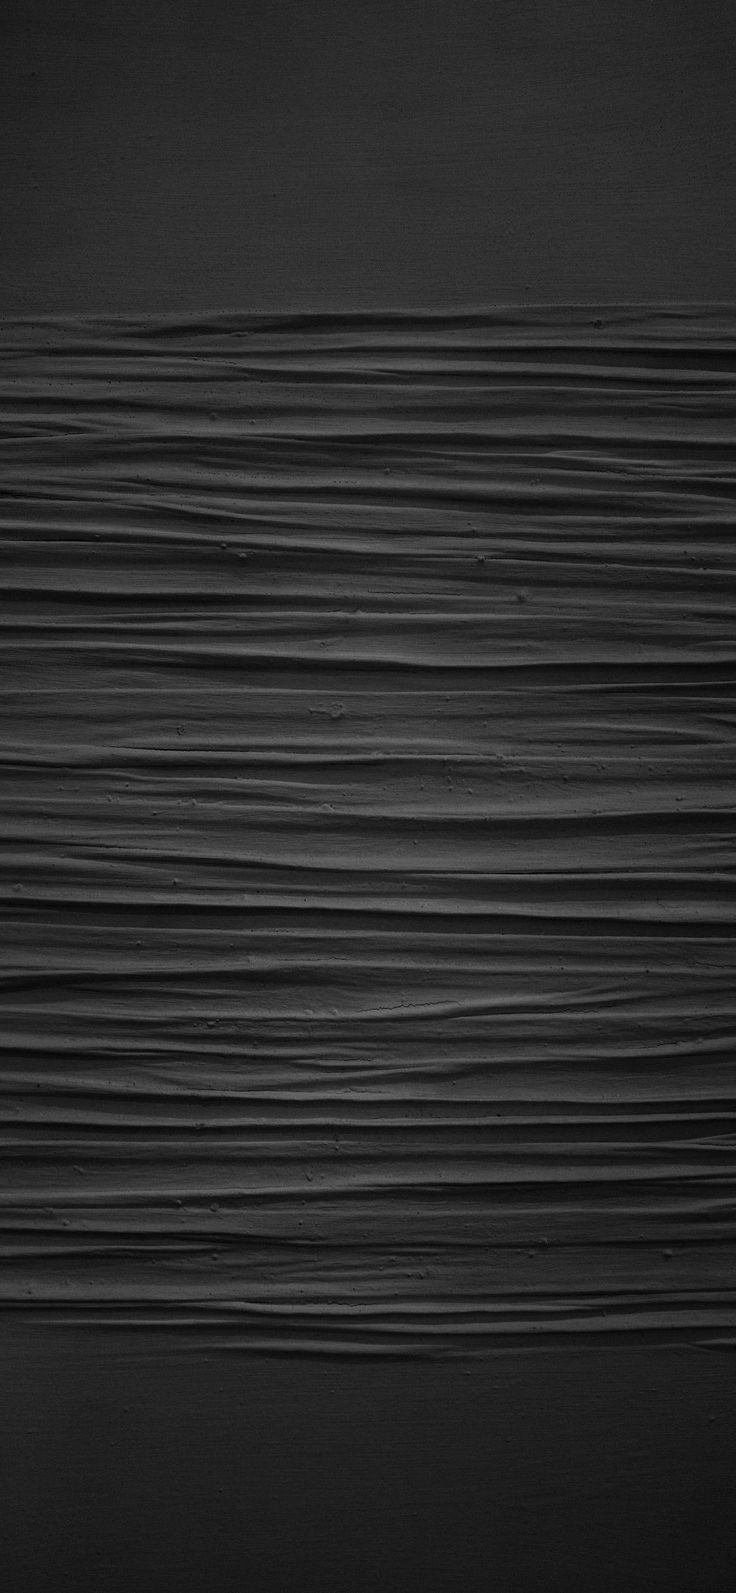 Best Black Wallpaper 4k Background. Black wallpaper, Black painted walls, Textured wallpaper